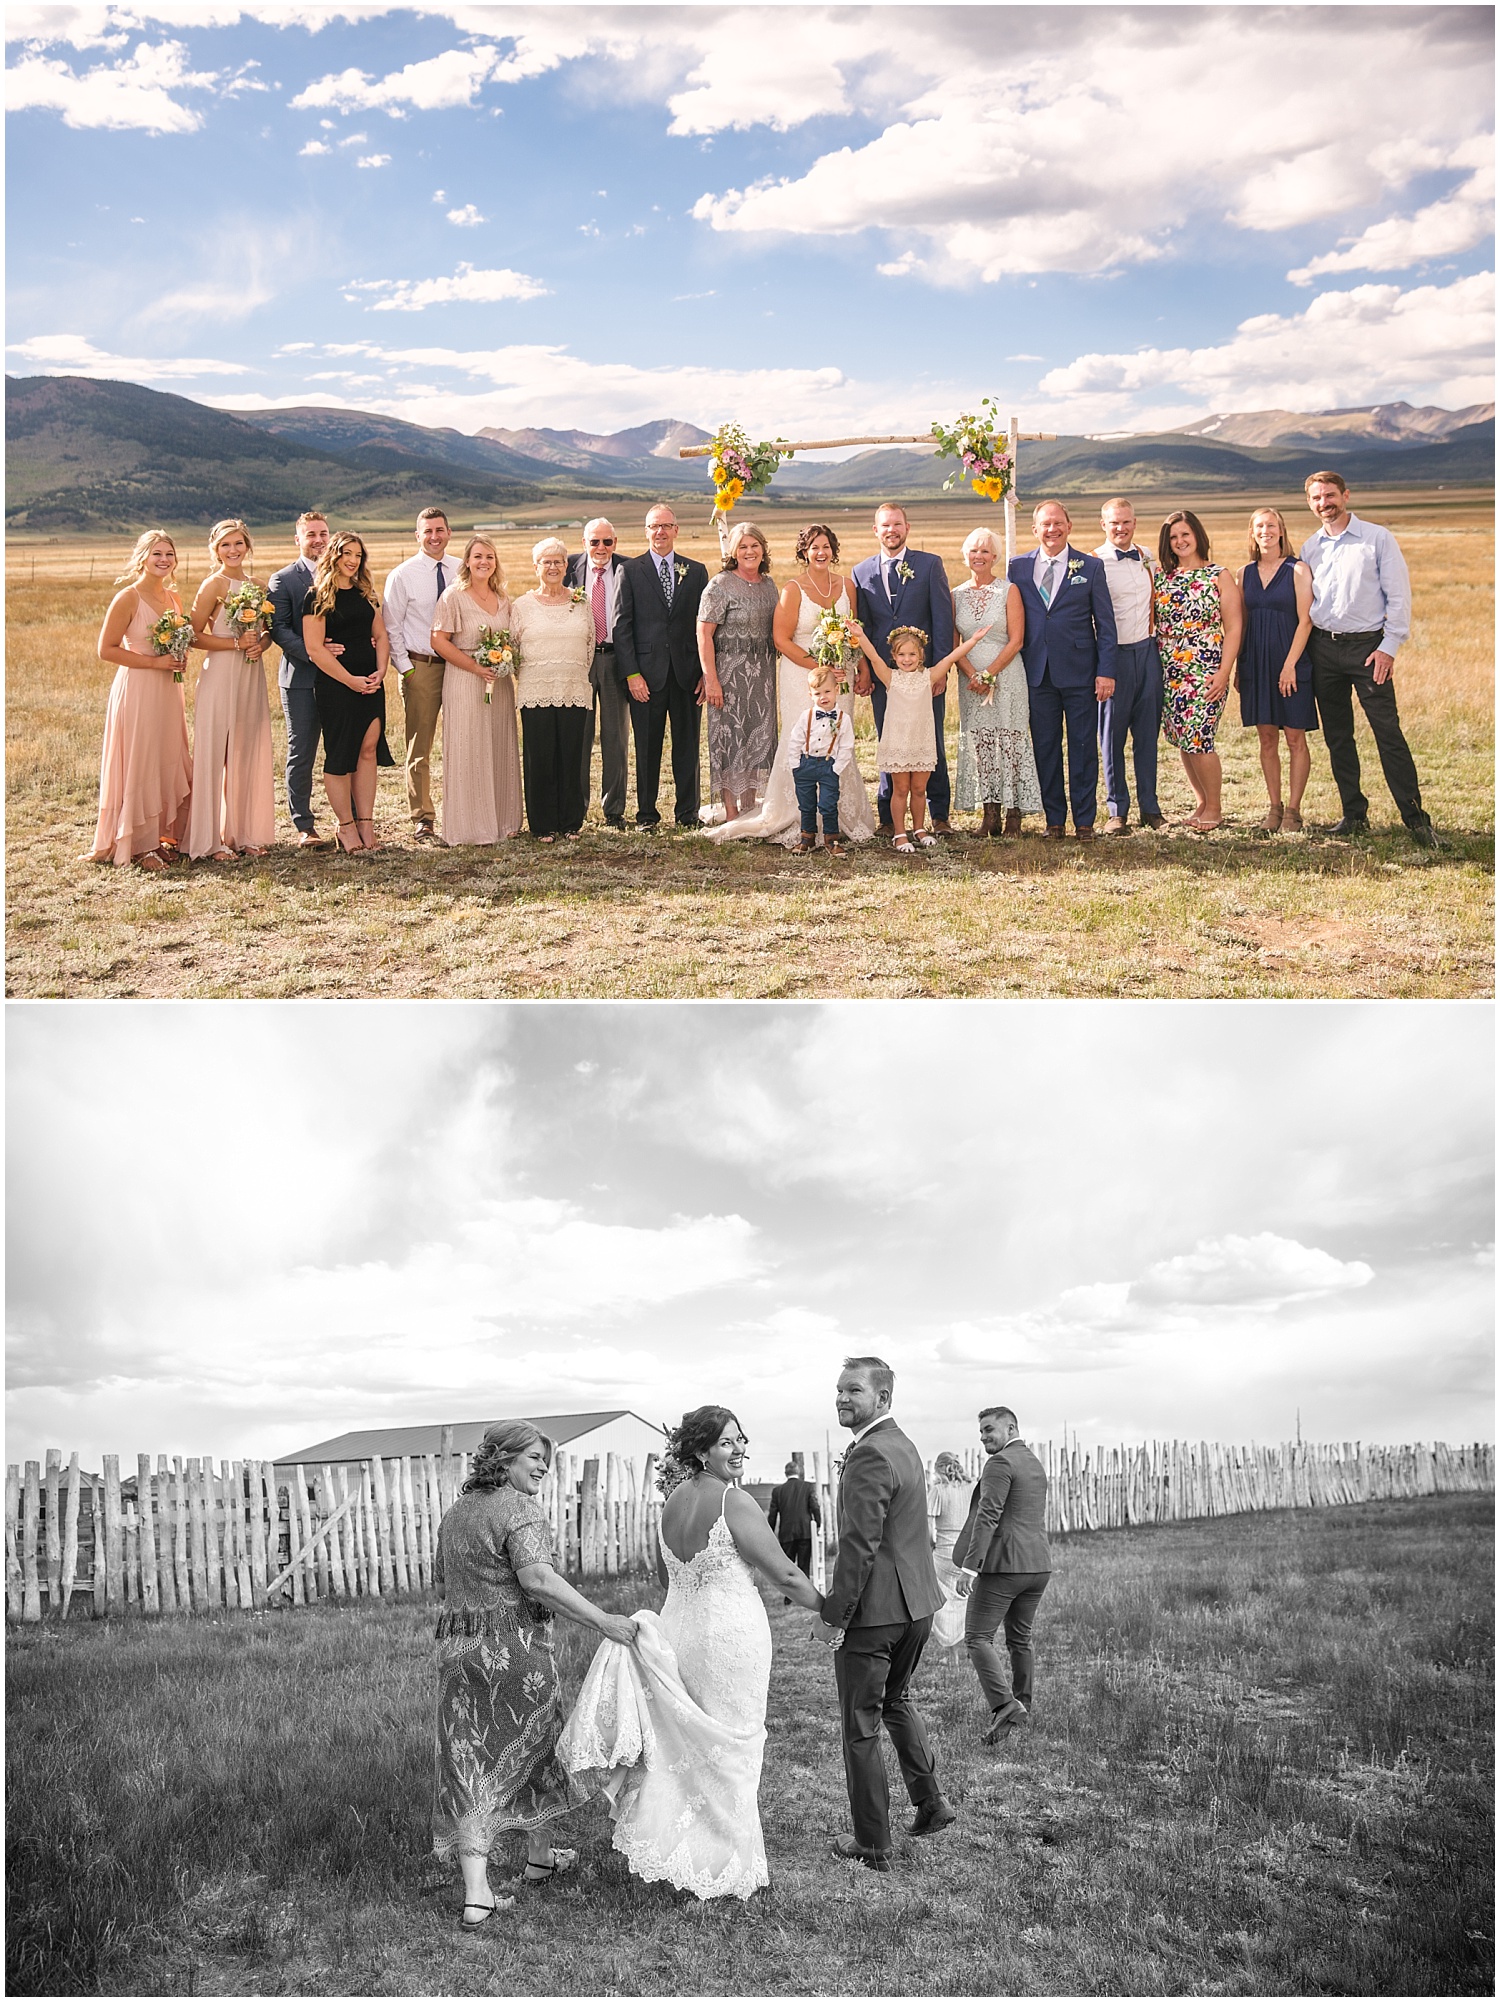 Guyton Ranch wedding portraits in the field